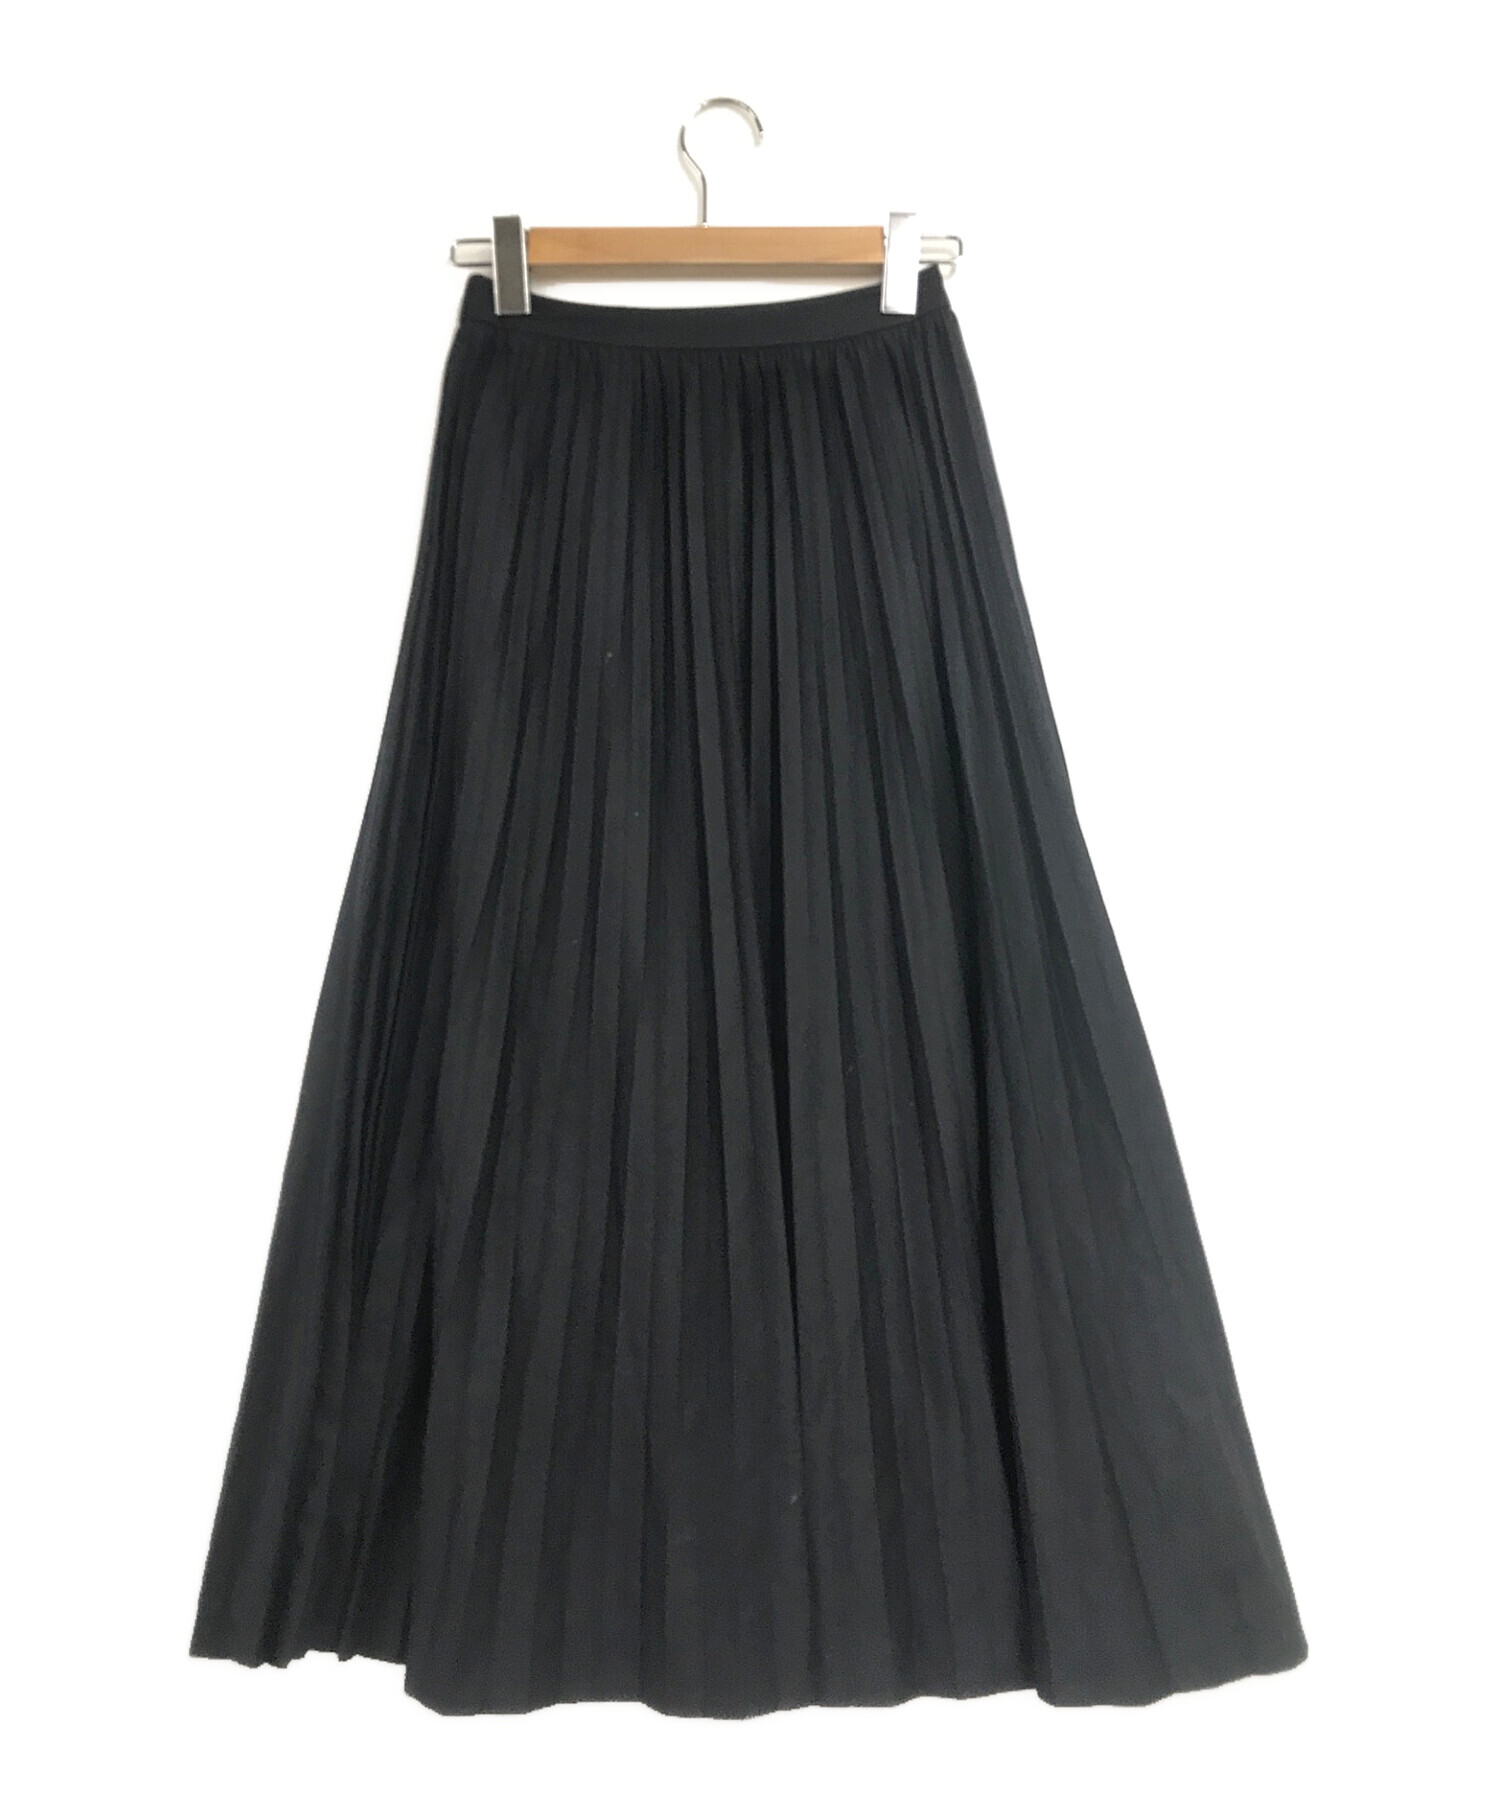 CLANE (クラネ) ロングプリーツスカート ブラック サイズ:36